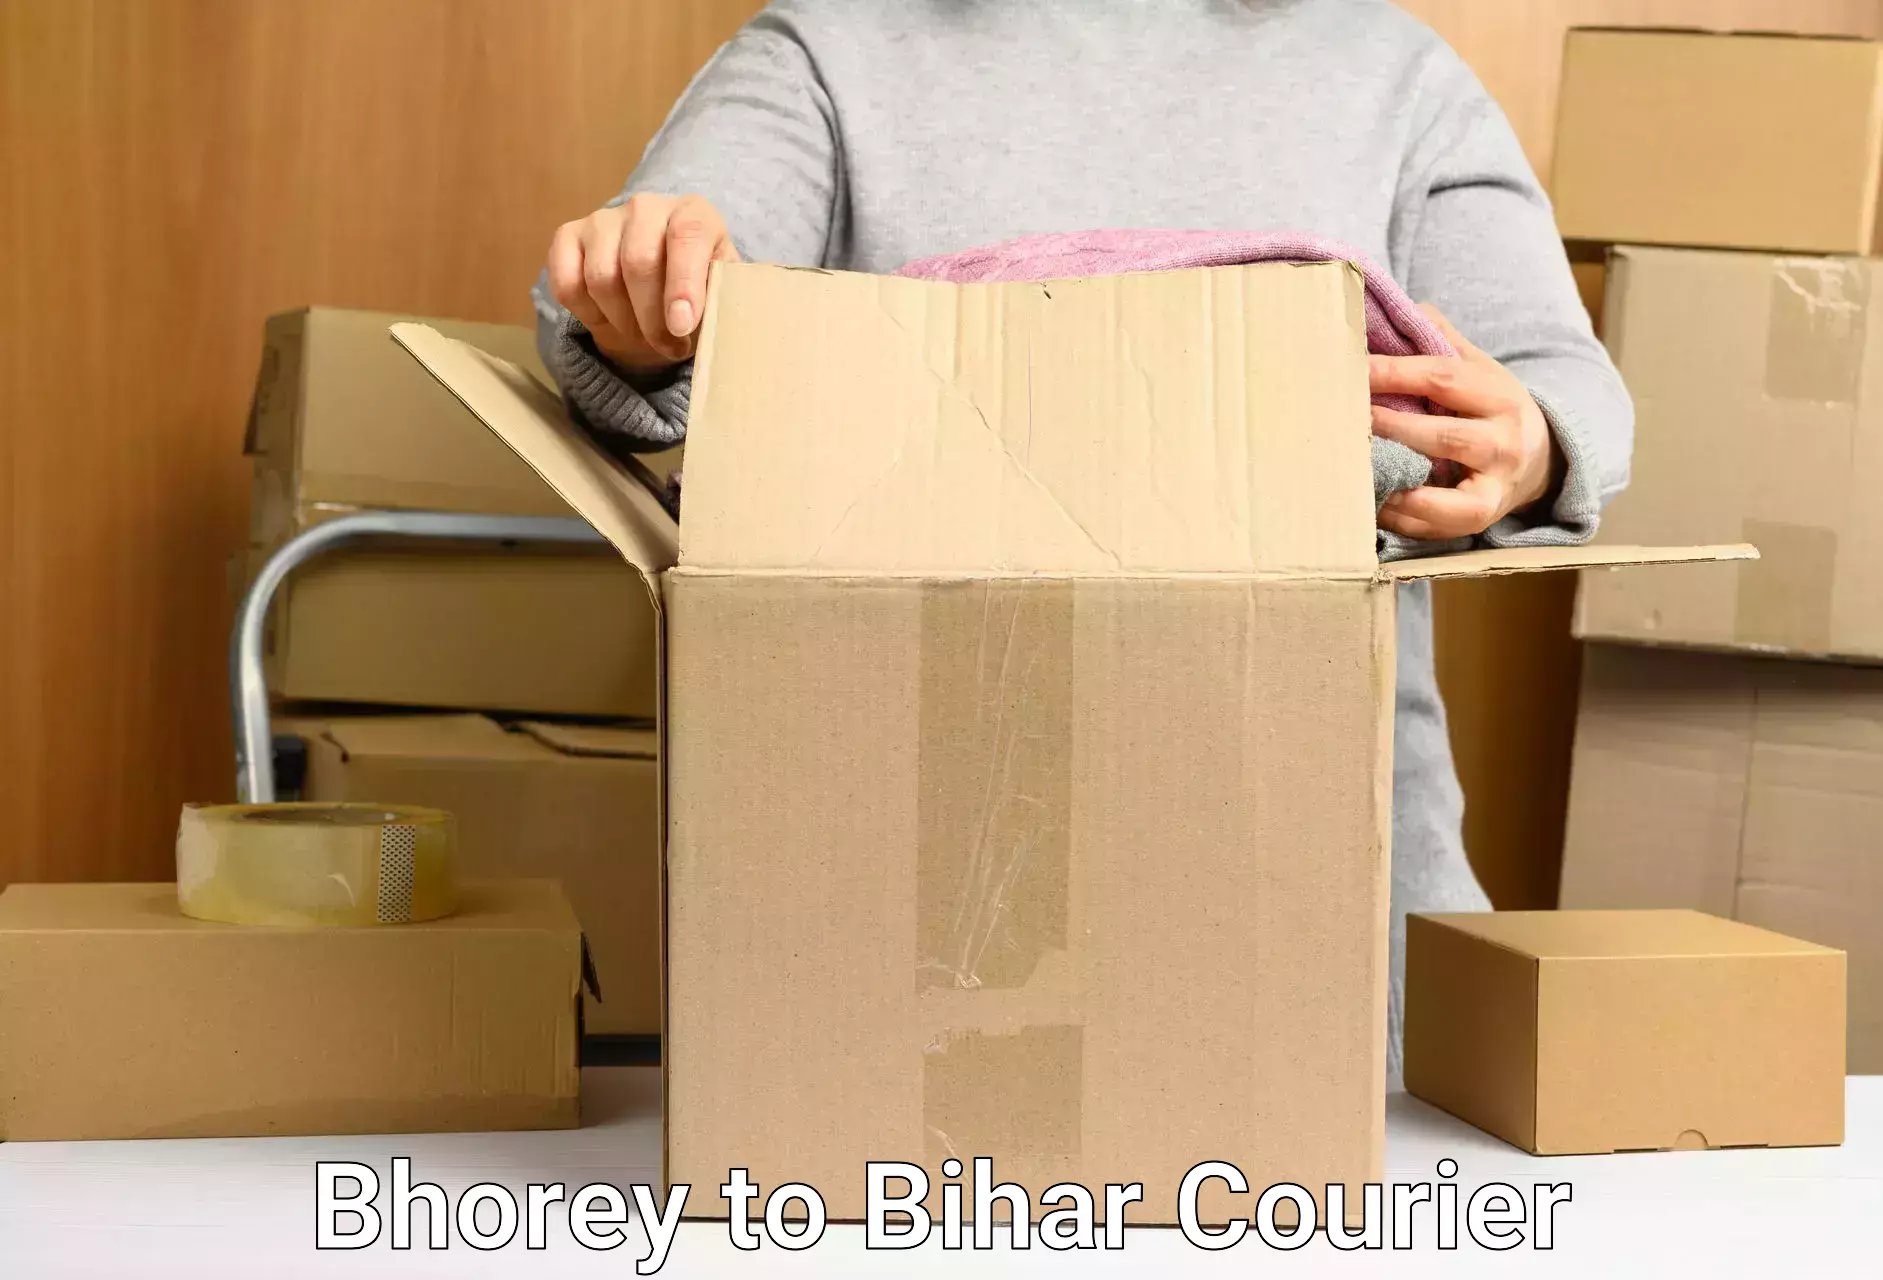 Courier service comparison Bhorey to Danapur